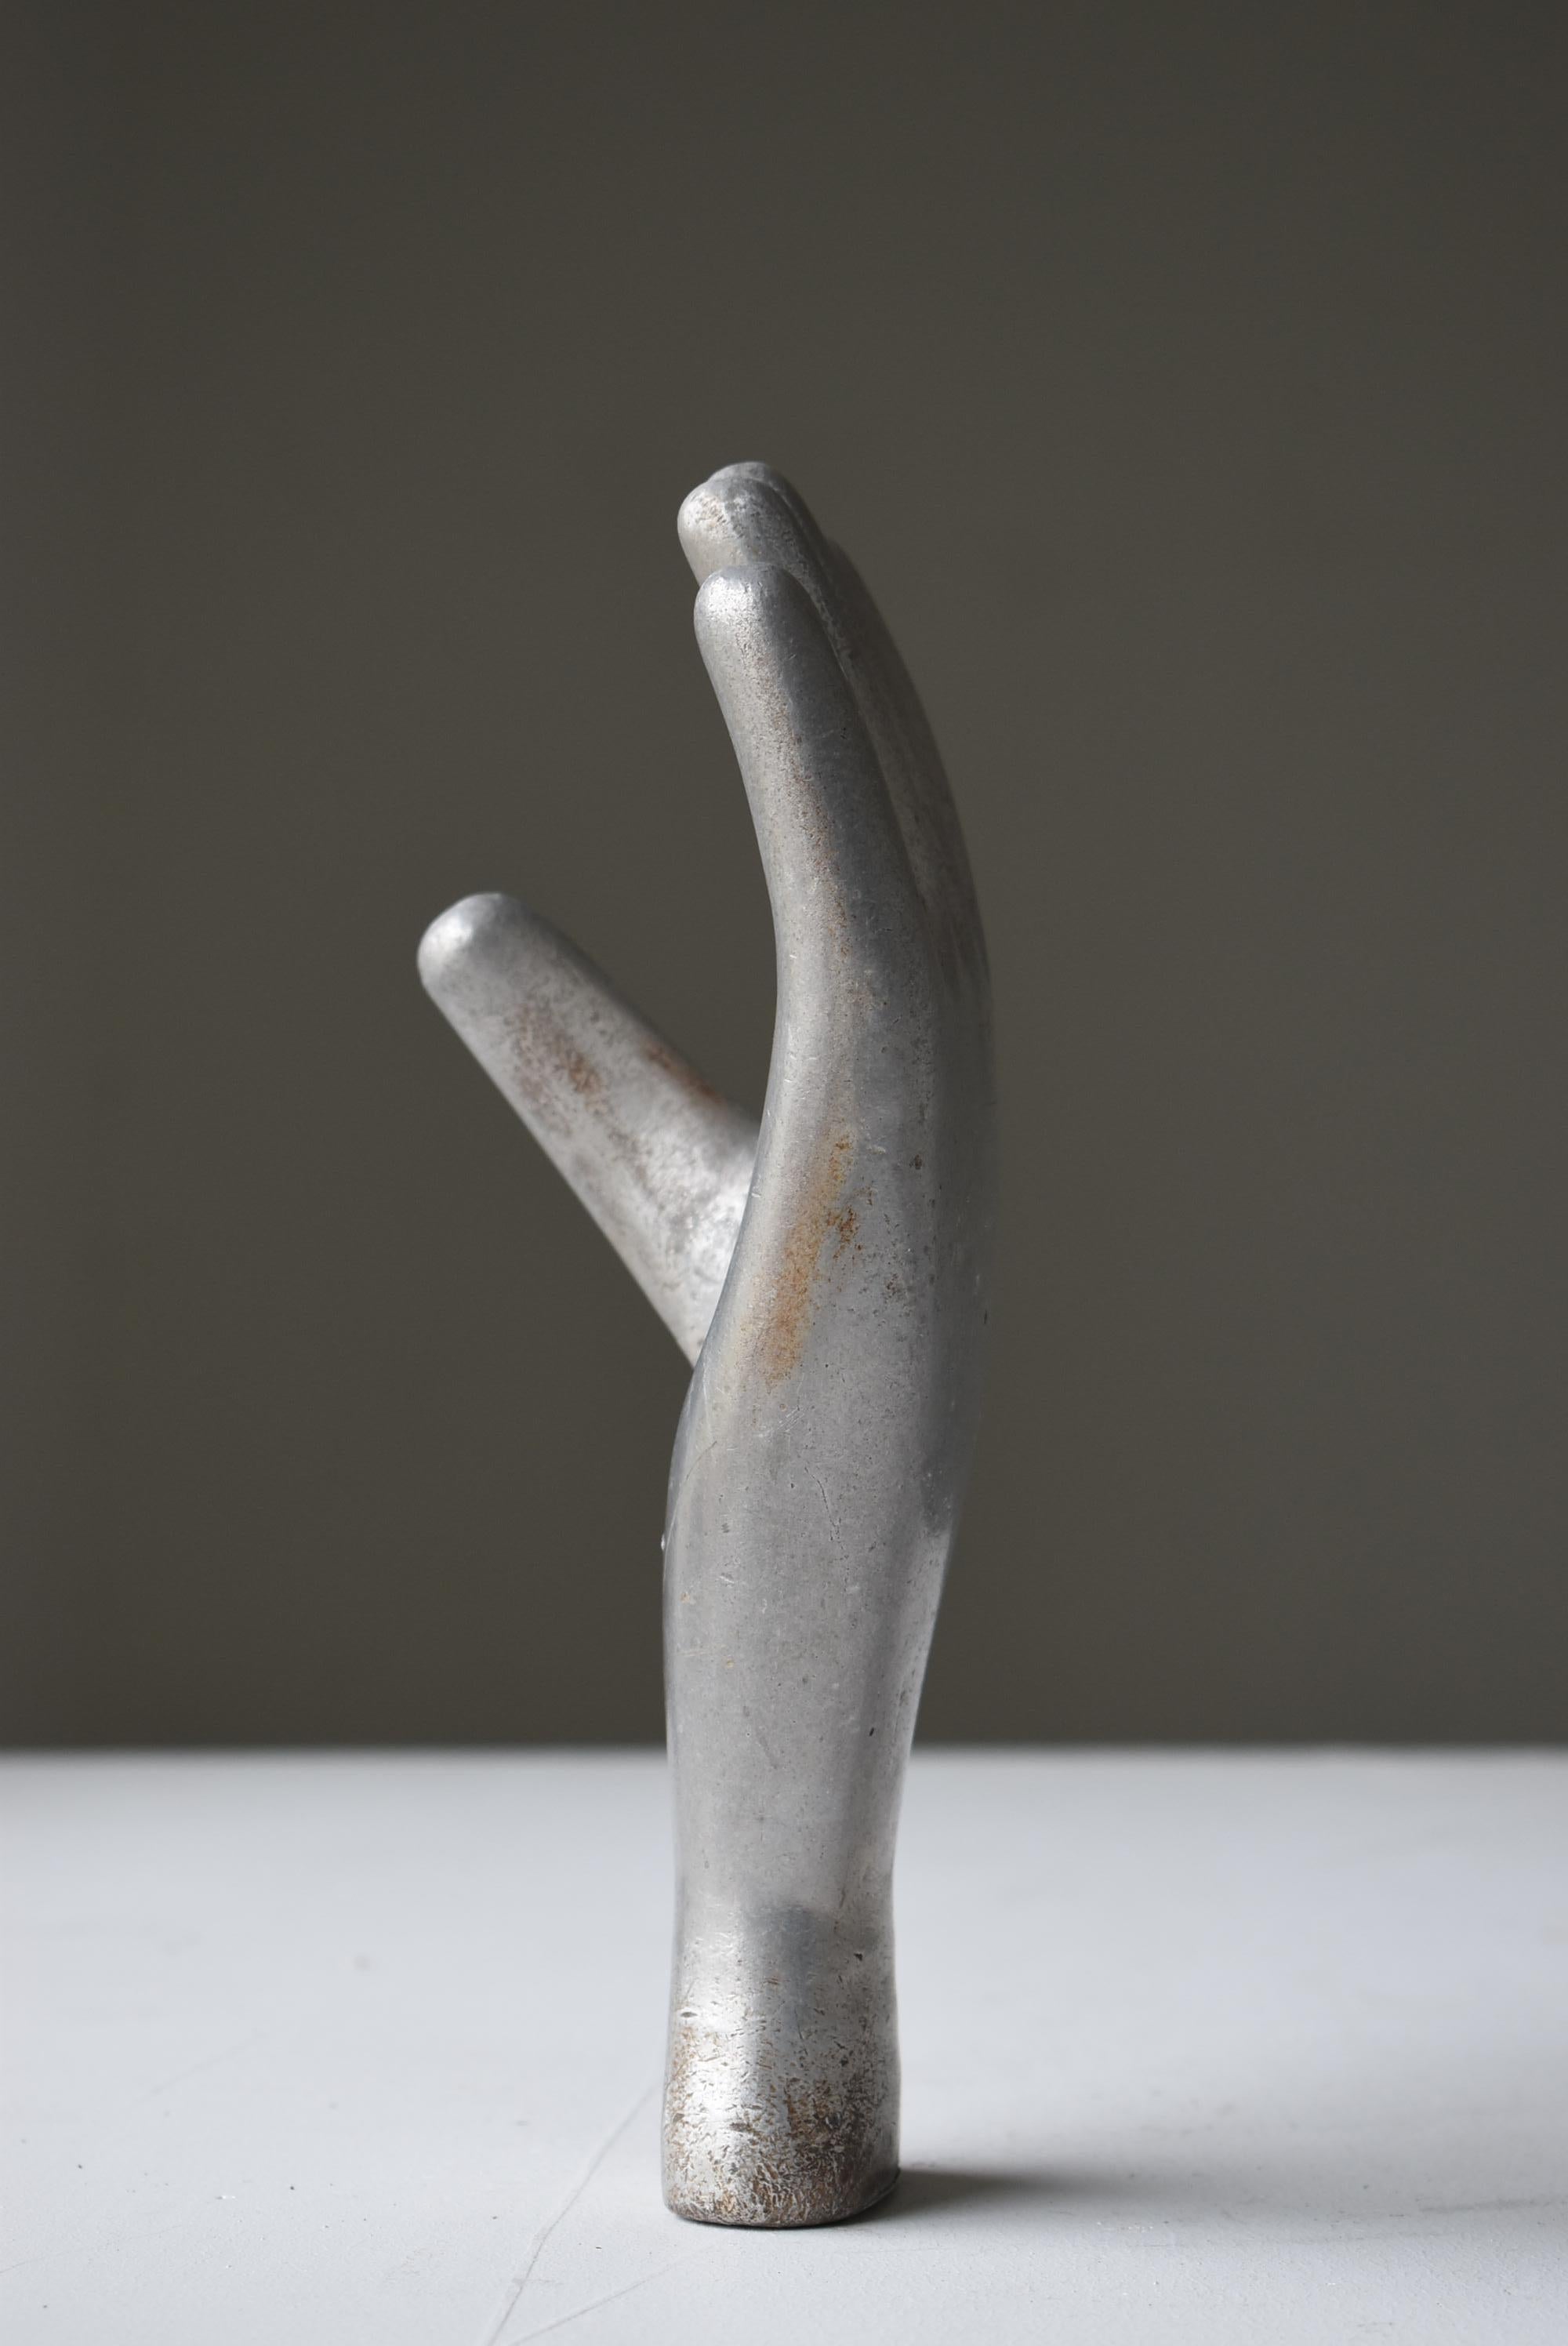 Japanese Old Aluminum Glove Mold 1920s-1950s/Hand Sculpture Figurine Vintage Art 2